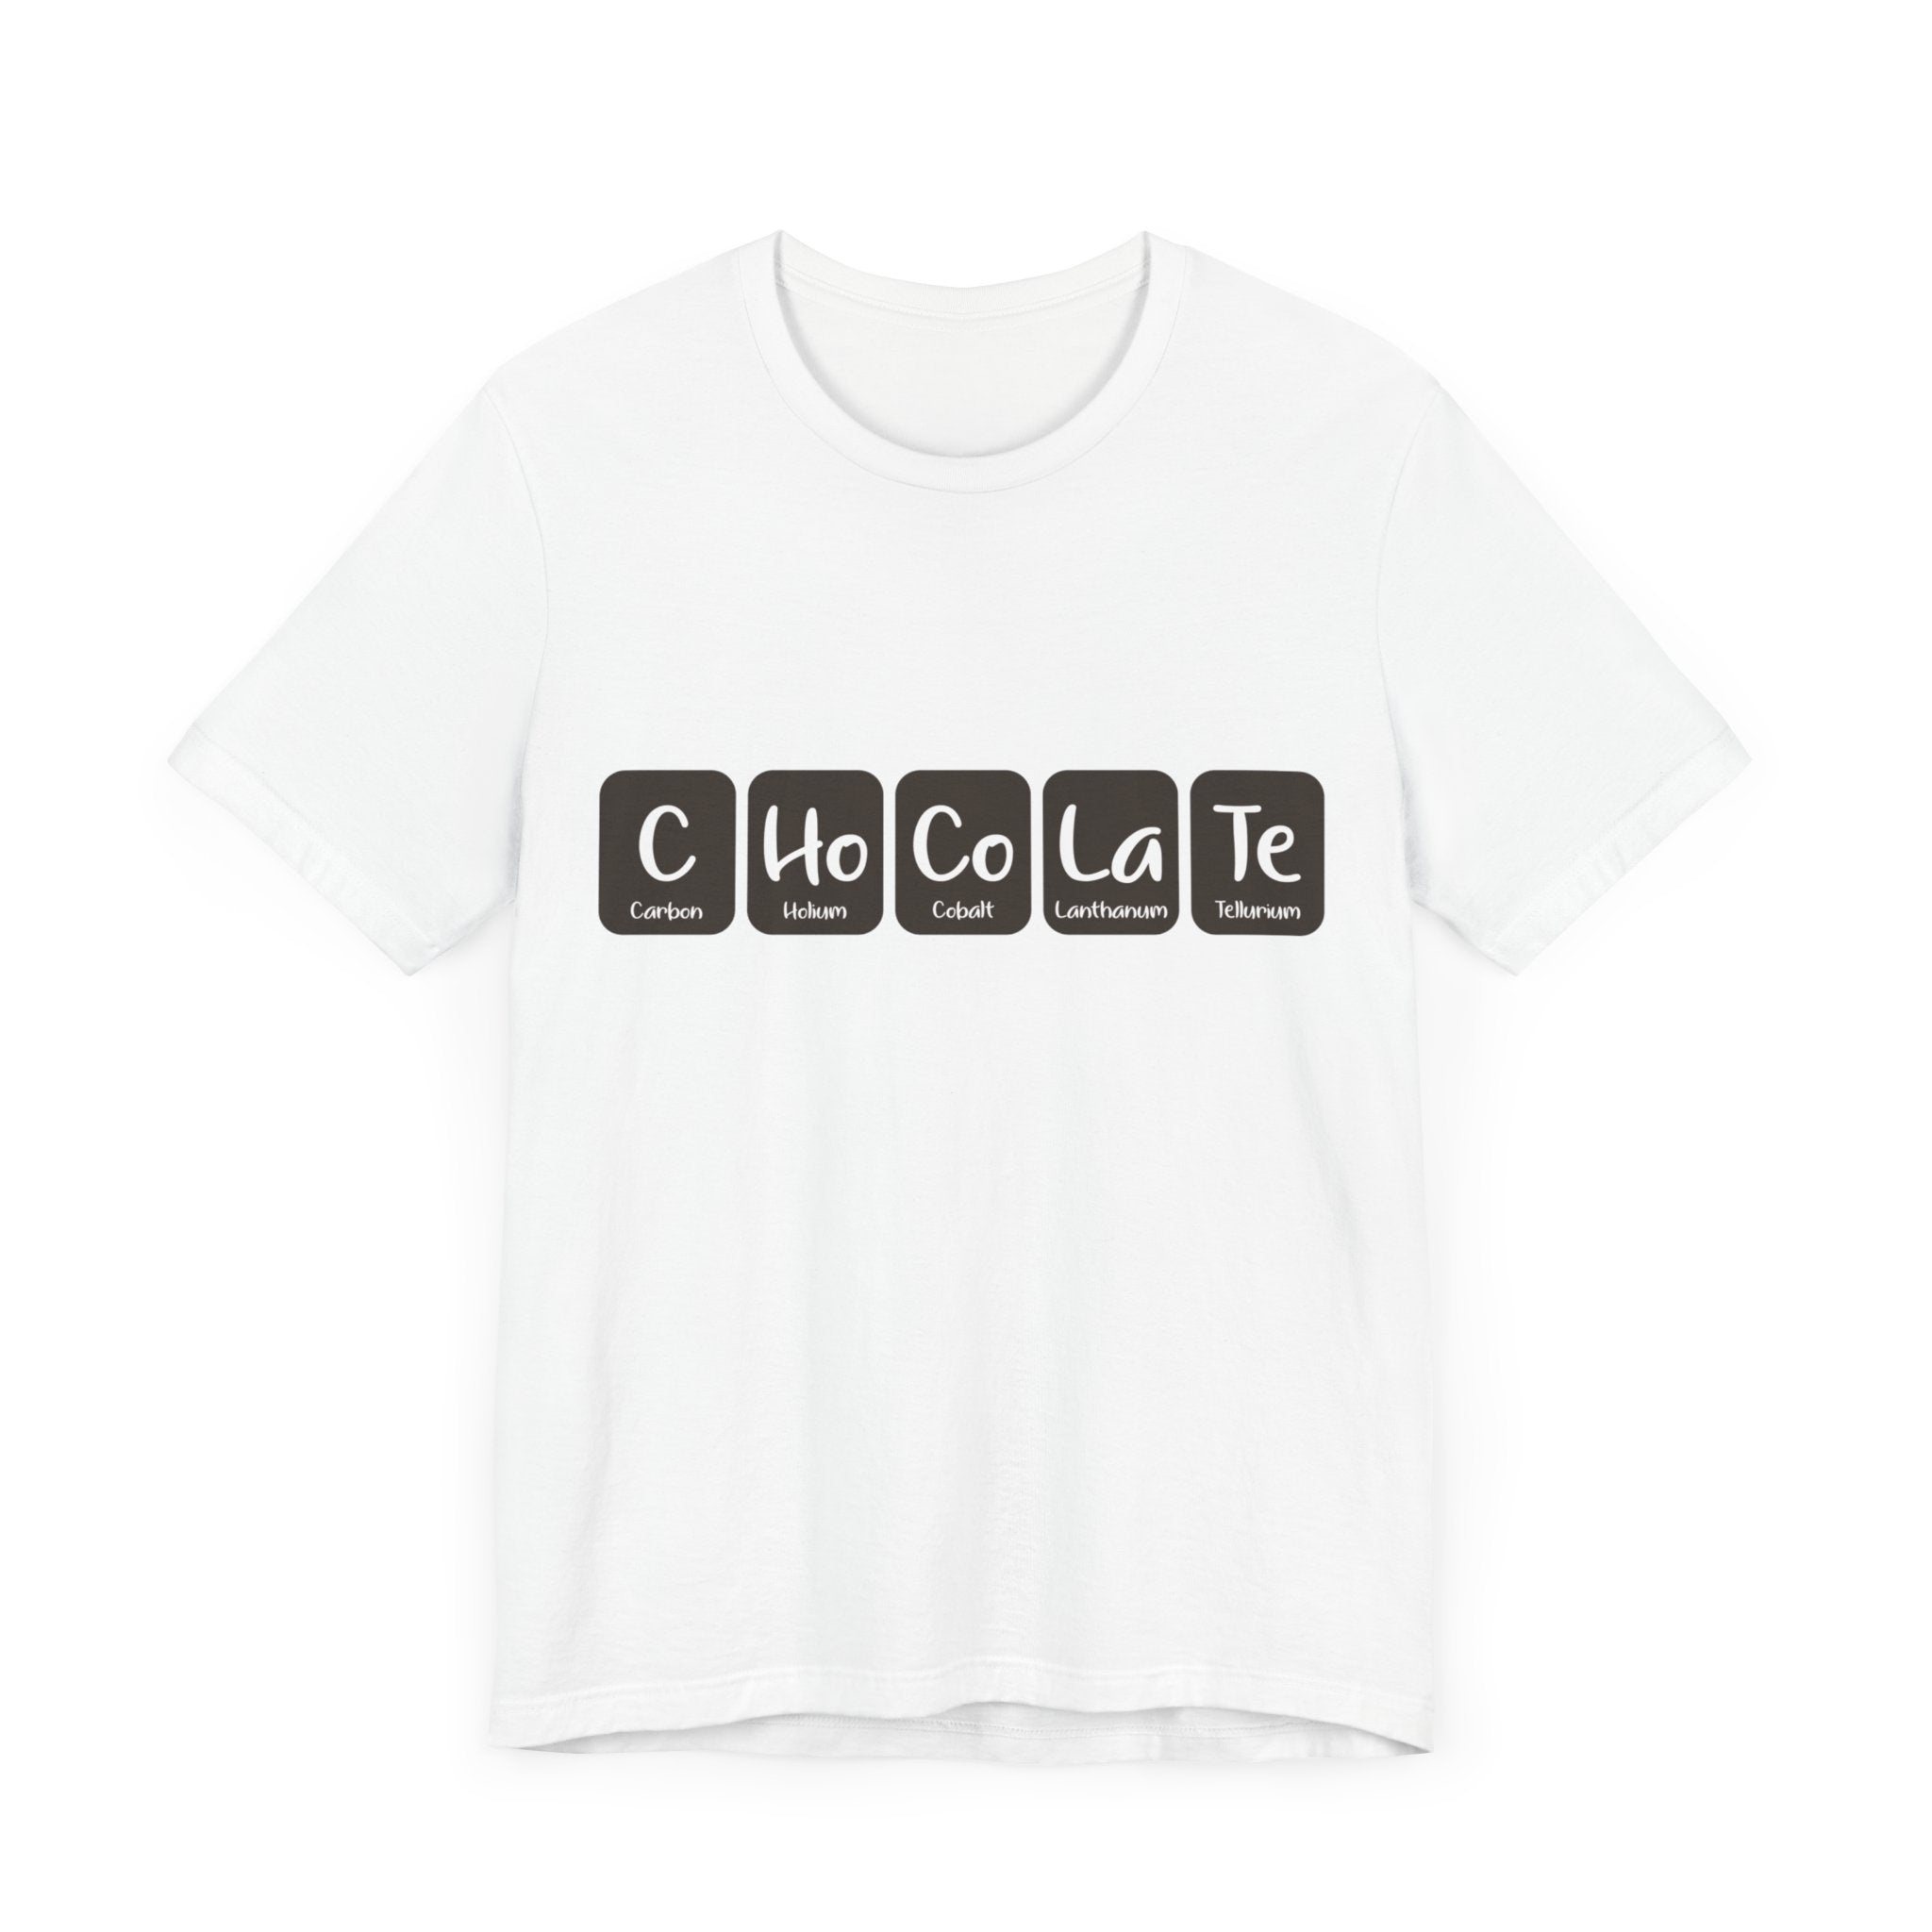 Stylish white C-Ho-Co-La-Te - T-Shirt made from 100% Airlume cotton, featuring black square elements resembling periodic table tiles. This unique C-Ho-Co-La-Te design T-shirt spells "CHoCoLaTe" with atomic symbols: Carbon, Holmium, Cobalt, Lanthanum, Tellurium.